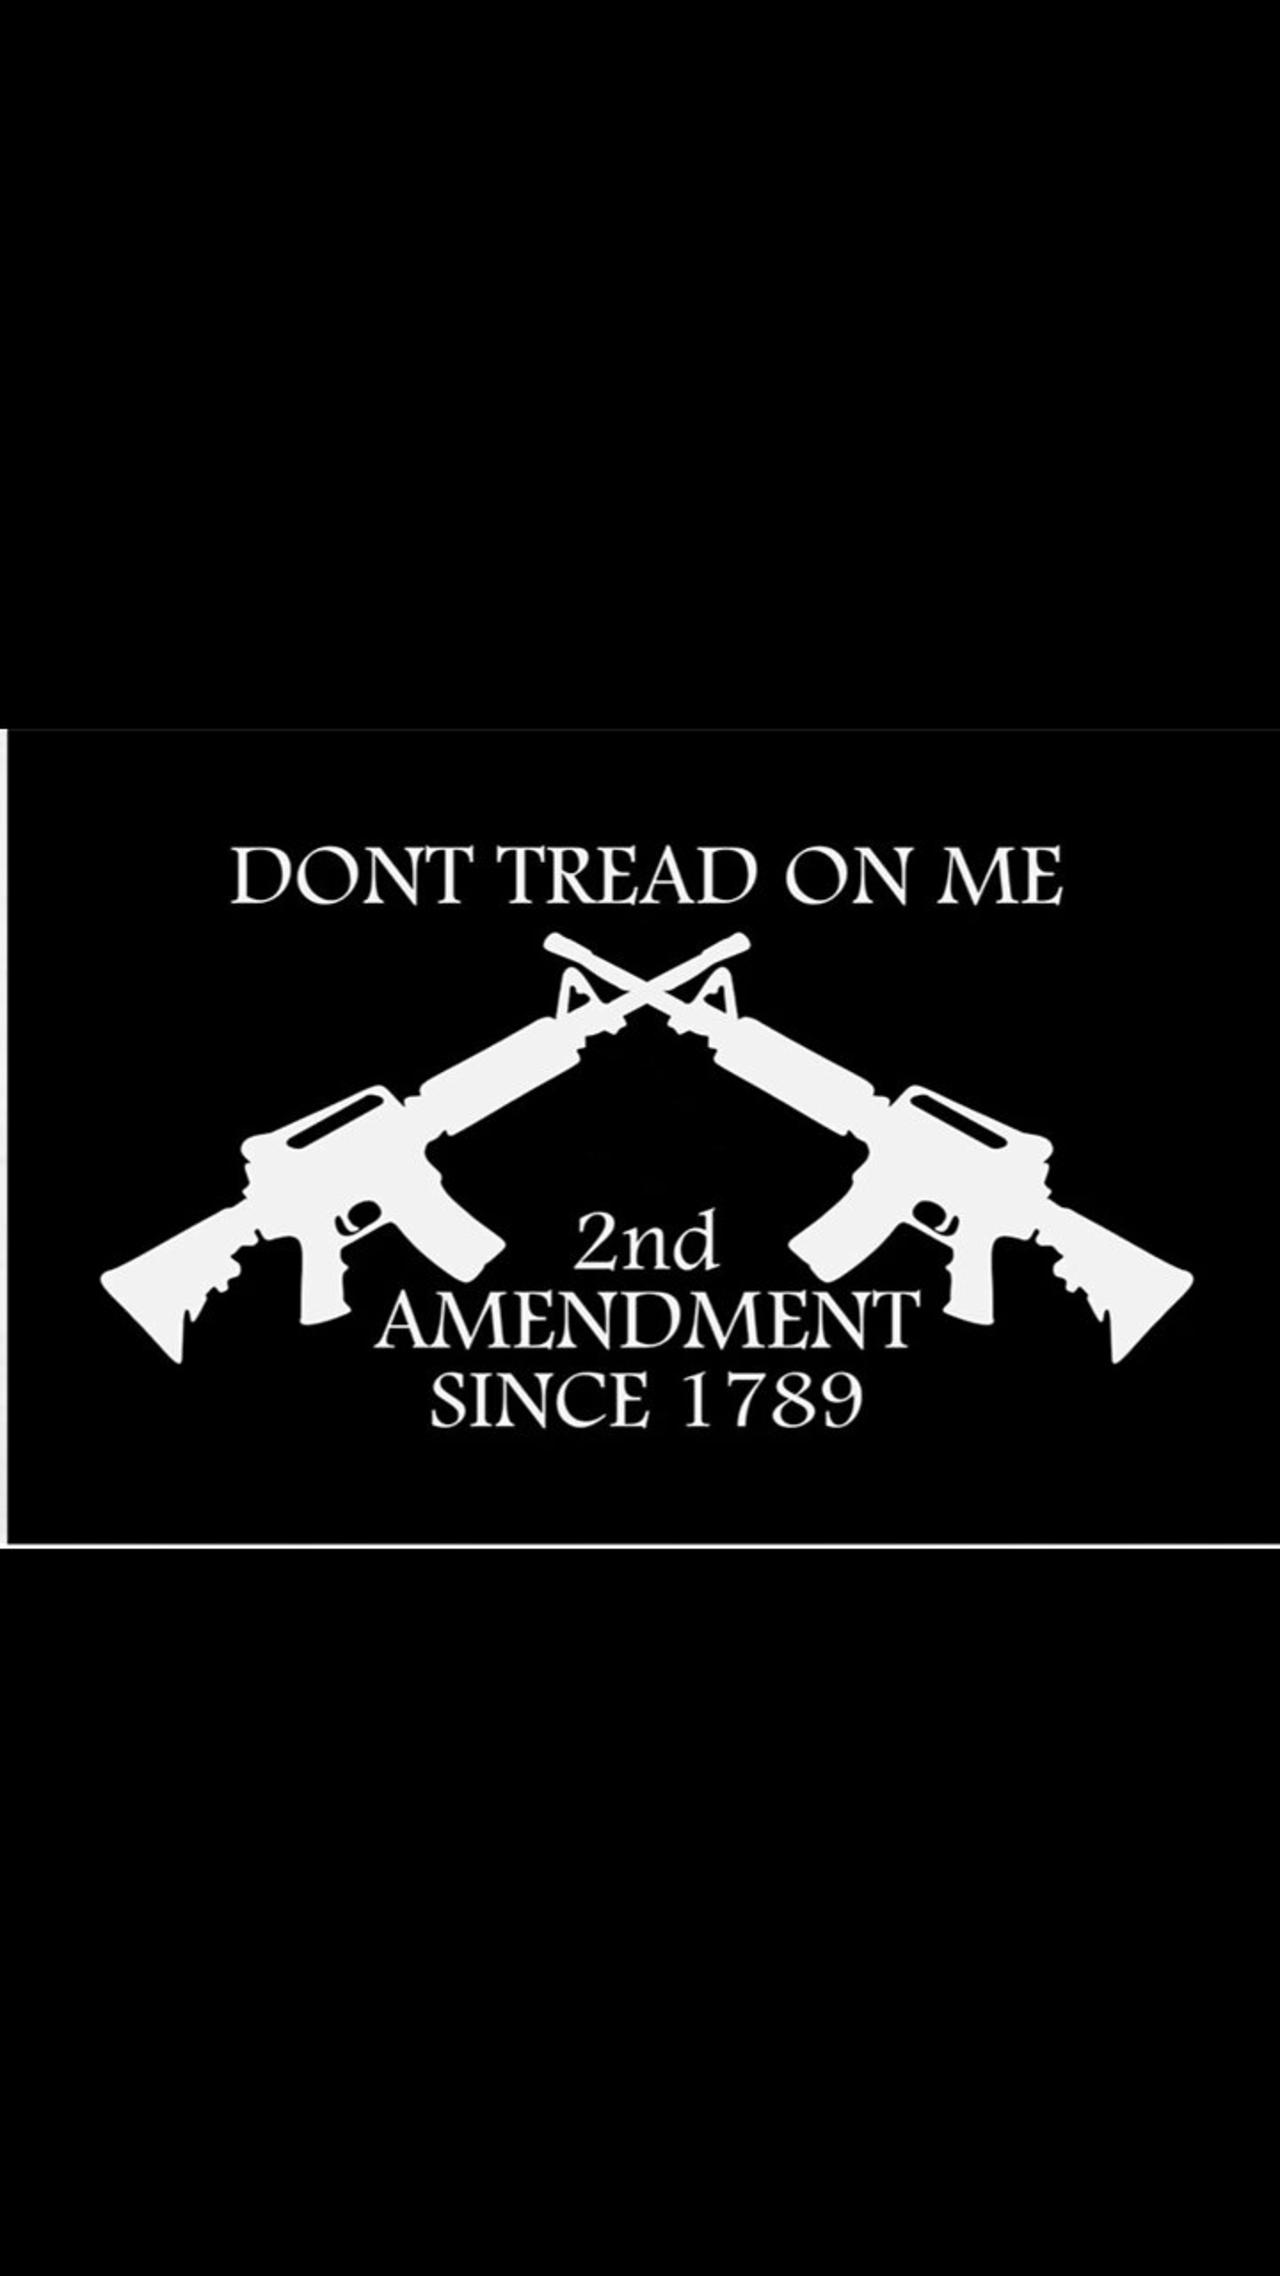 Gun rights won, 2nd Amendment defended and NP  23/June/22